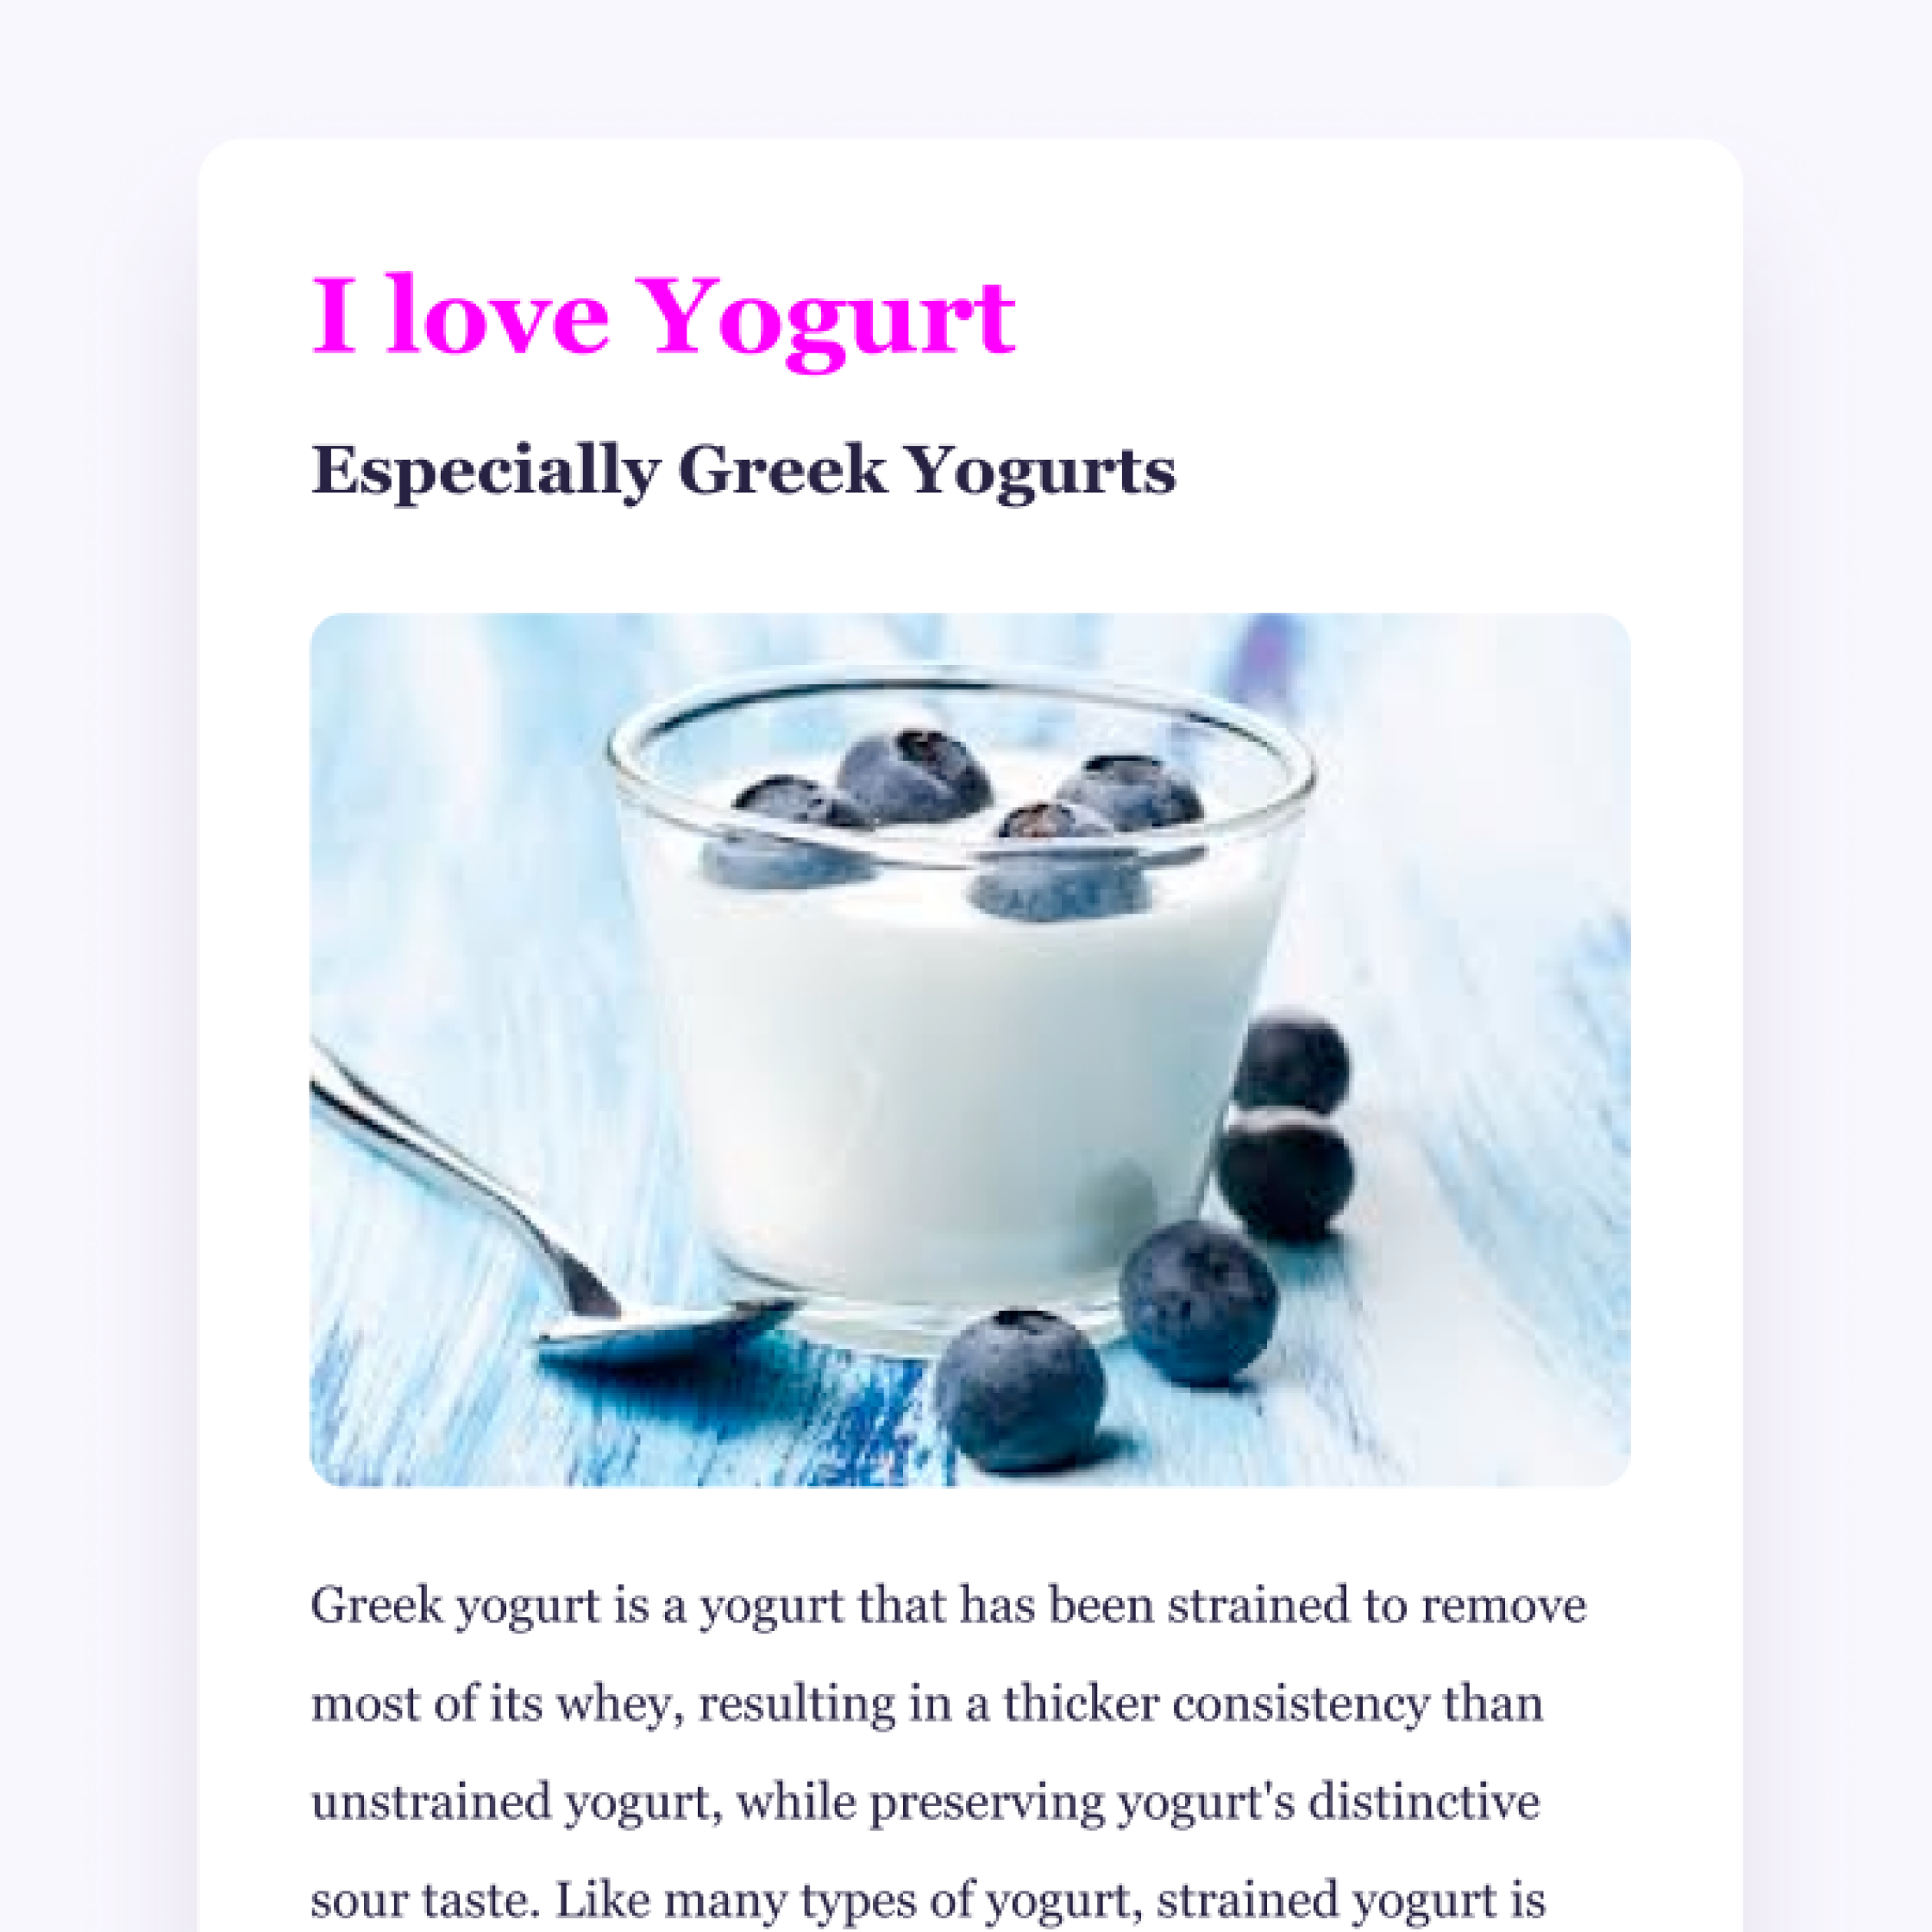 image from yogurt app